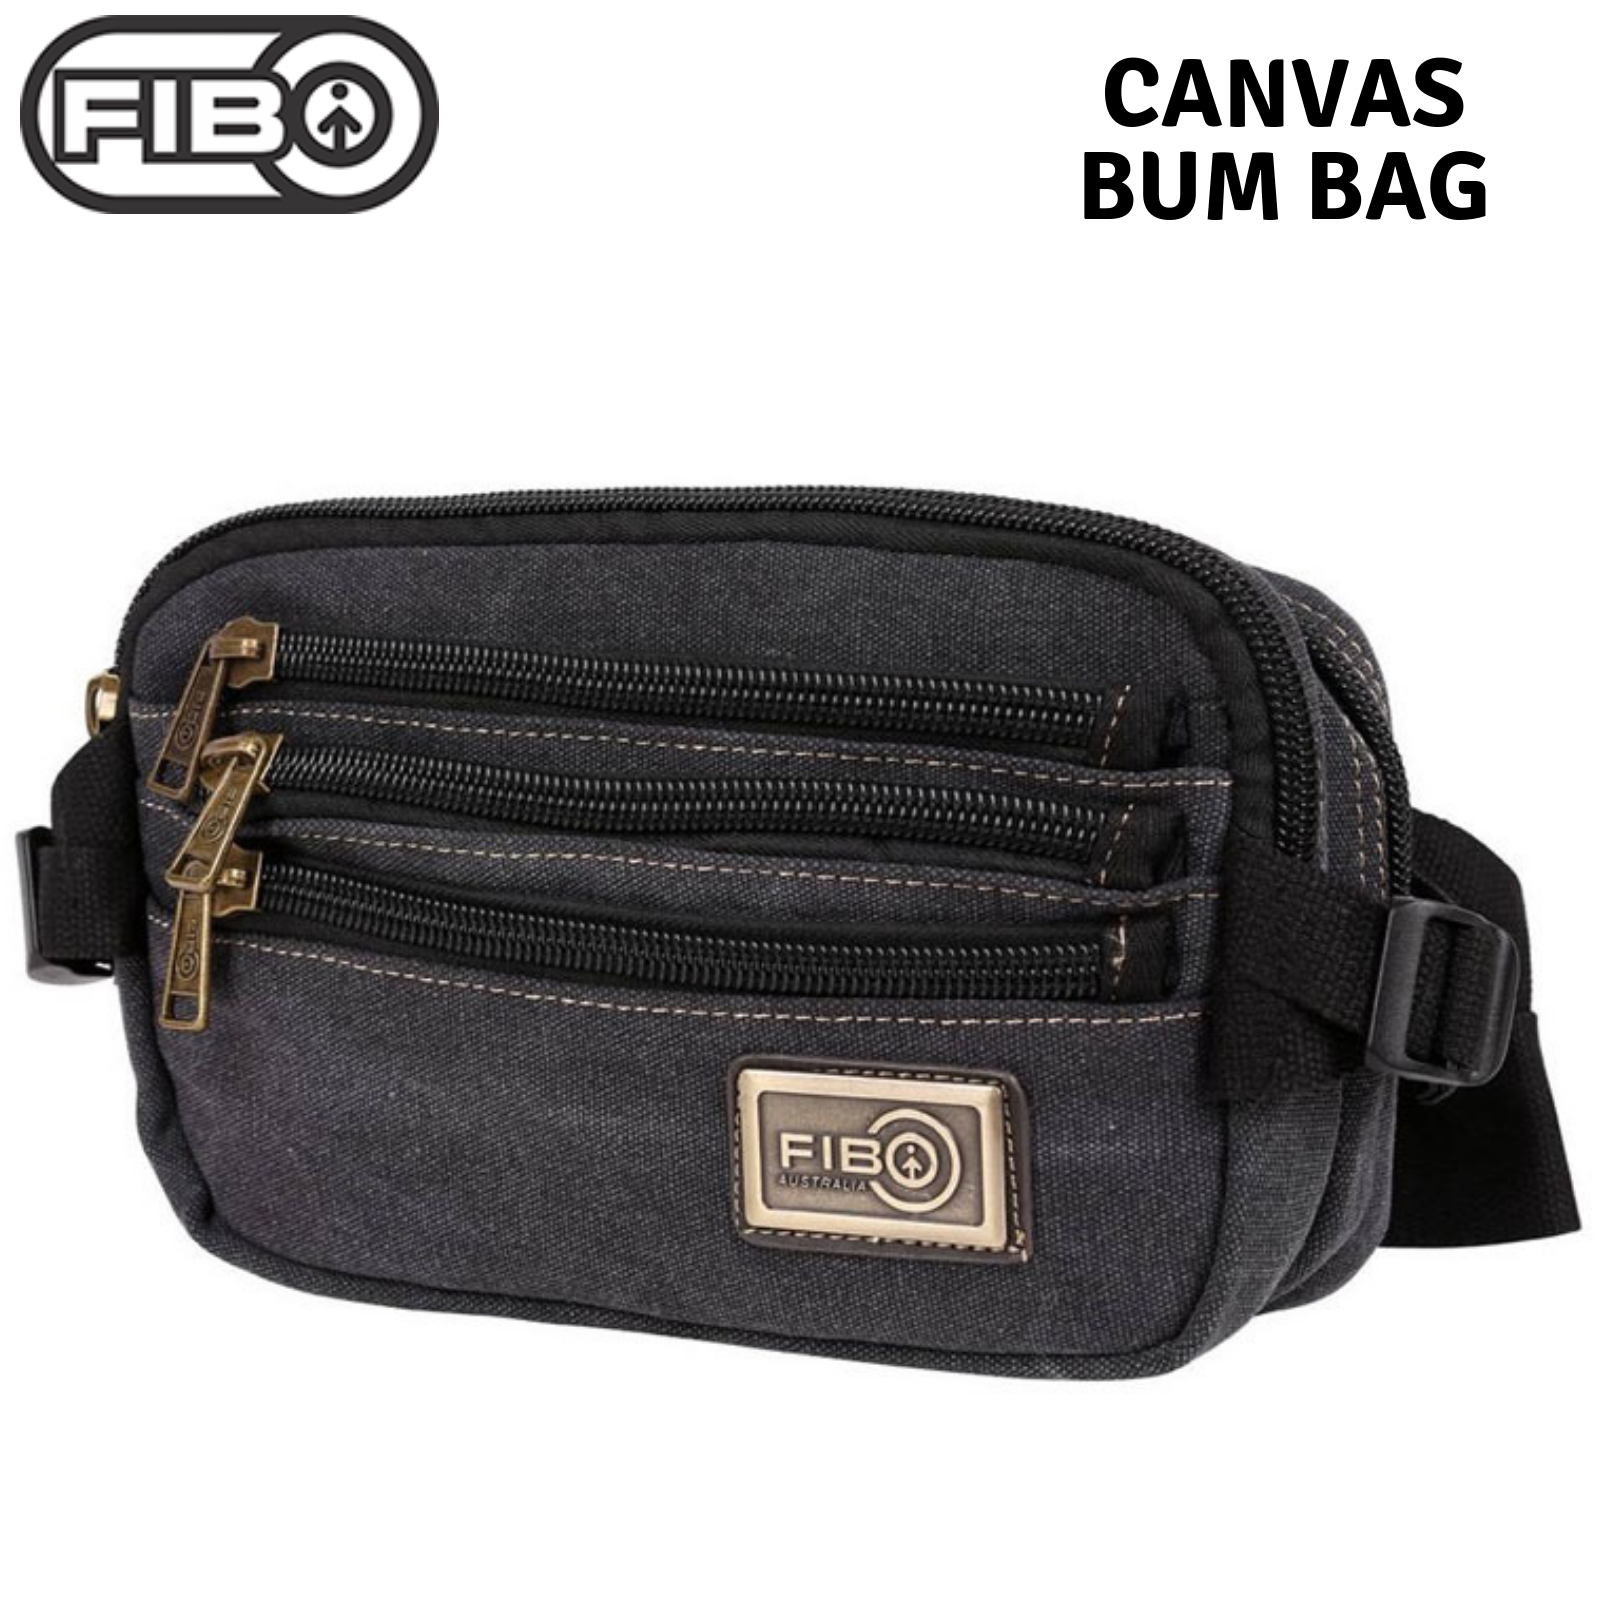 Canvas Bum Bag w Belt Wallet Waist Pouch Travel Mobile Phone Military - Black